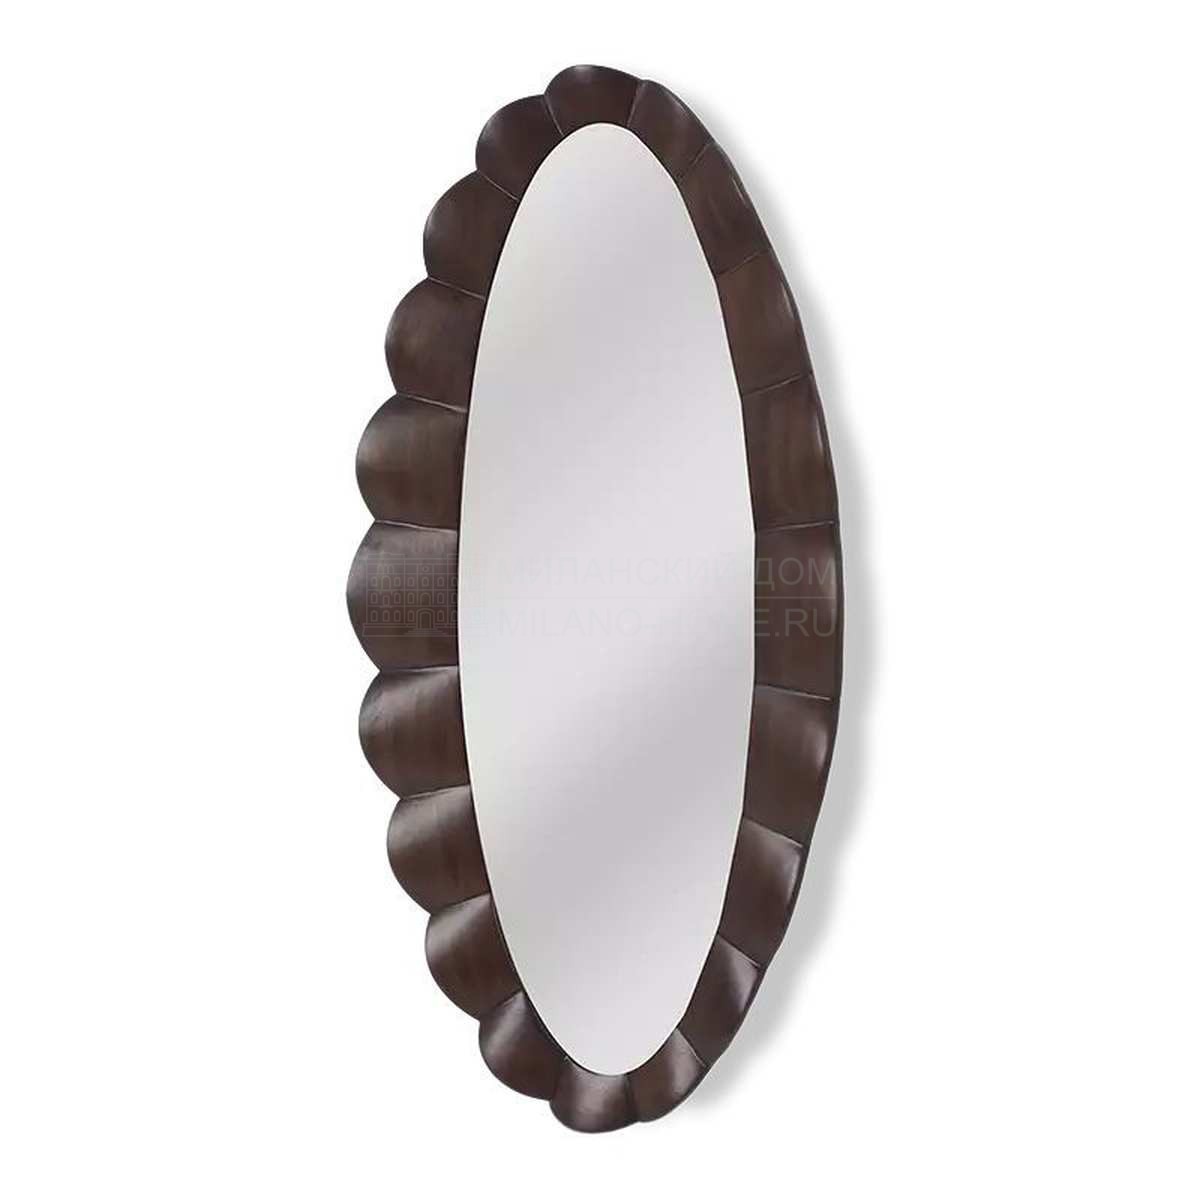 Зеркало настенное Frill mirror из США фабрики CHRISTOPHER GUY